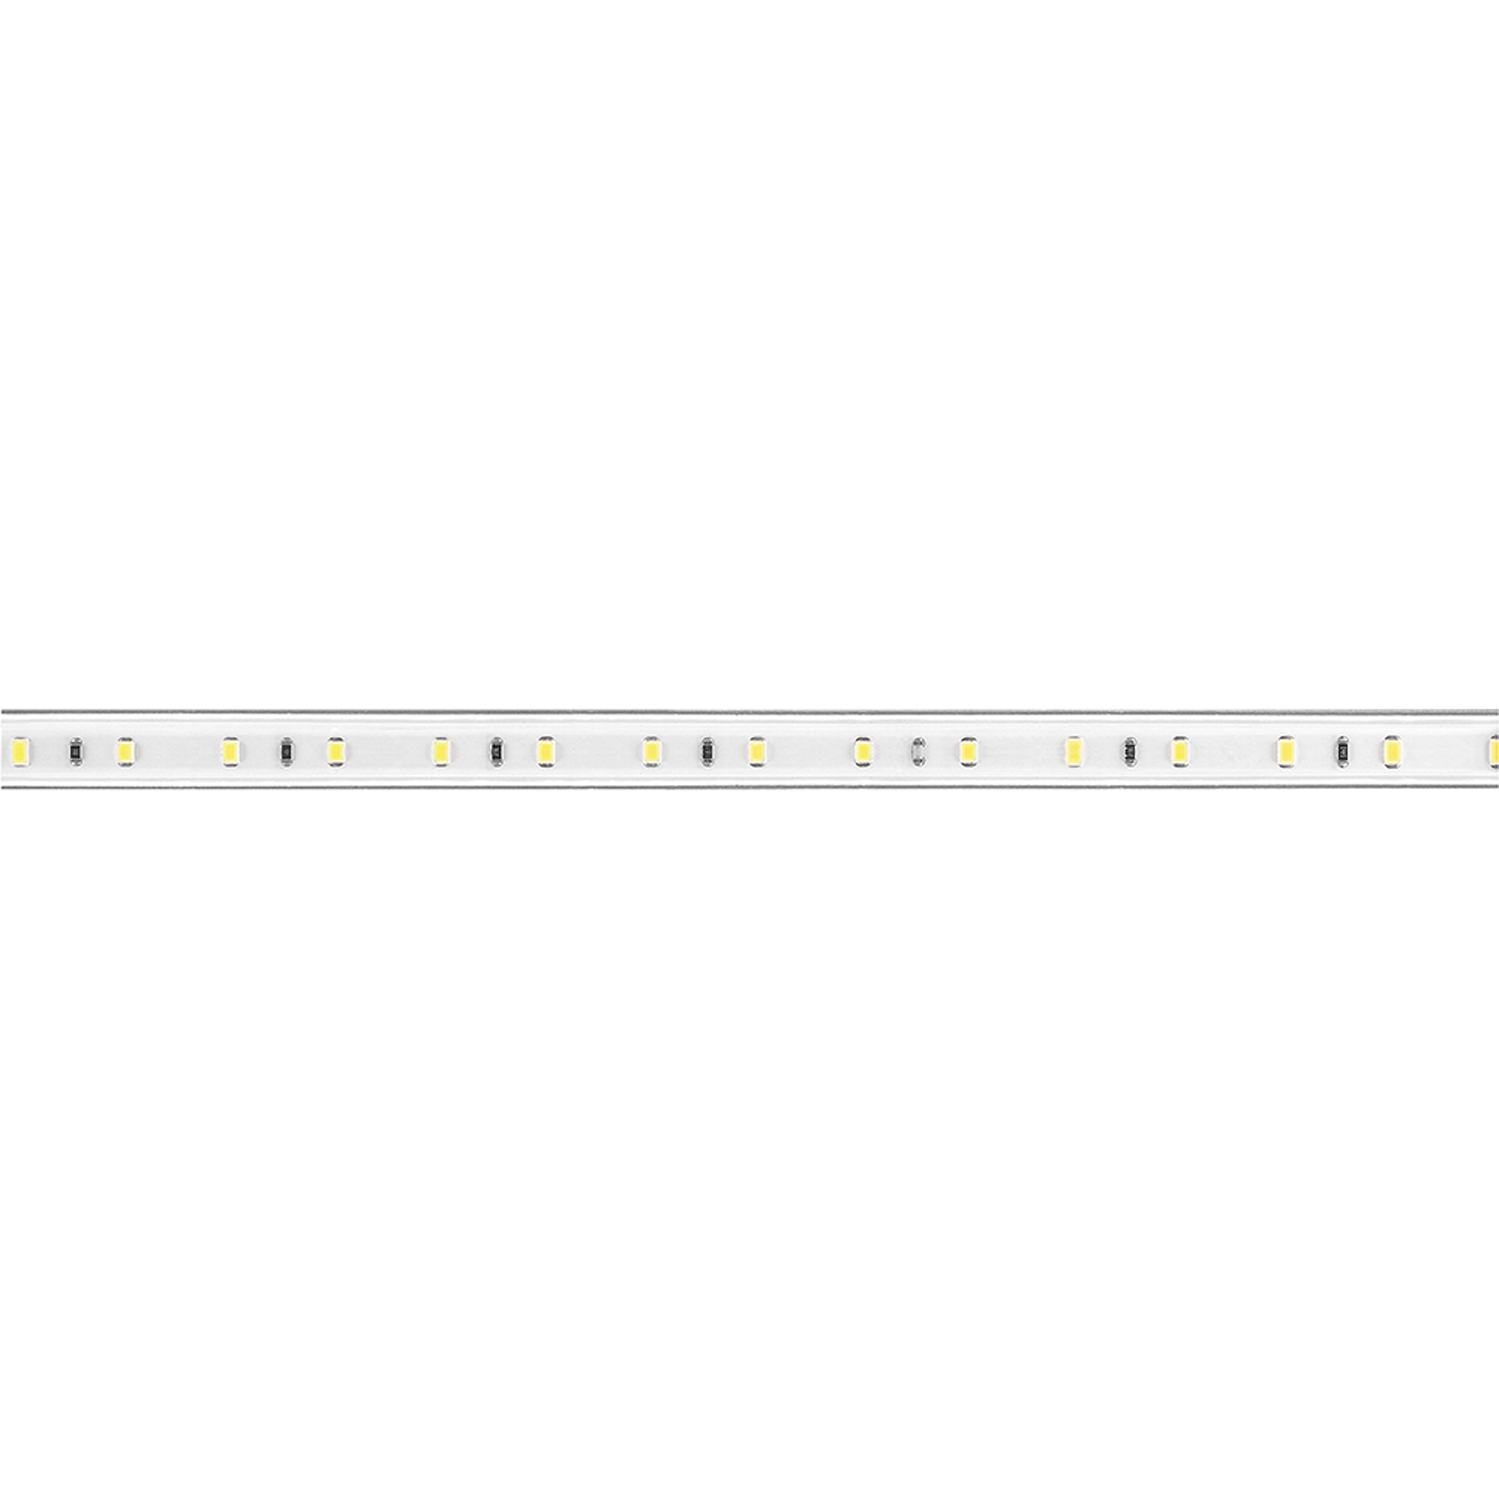 Cветодиодная LED лента Feron LS704, 60SMD(2835)/м 4.4Вт/м  100м 220V IP65. желтый